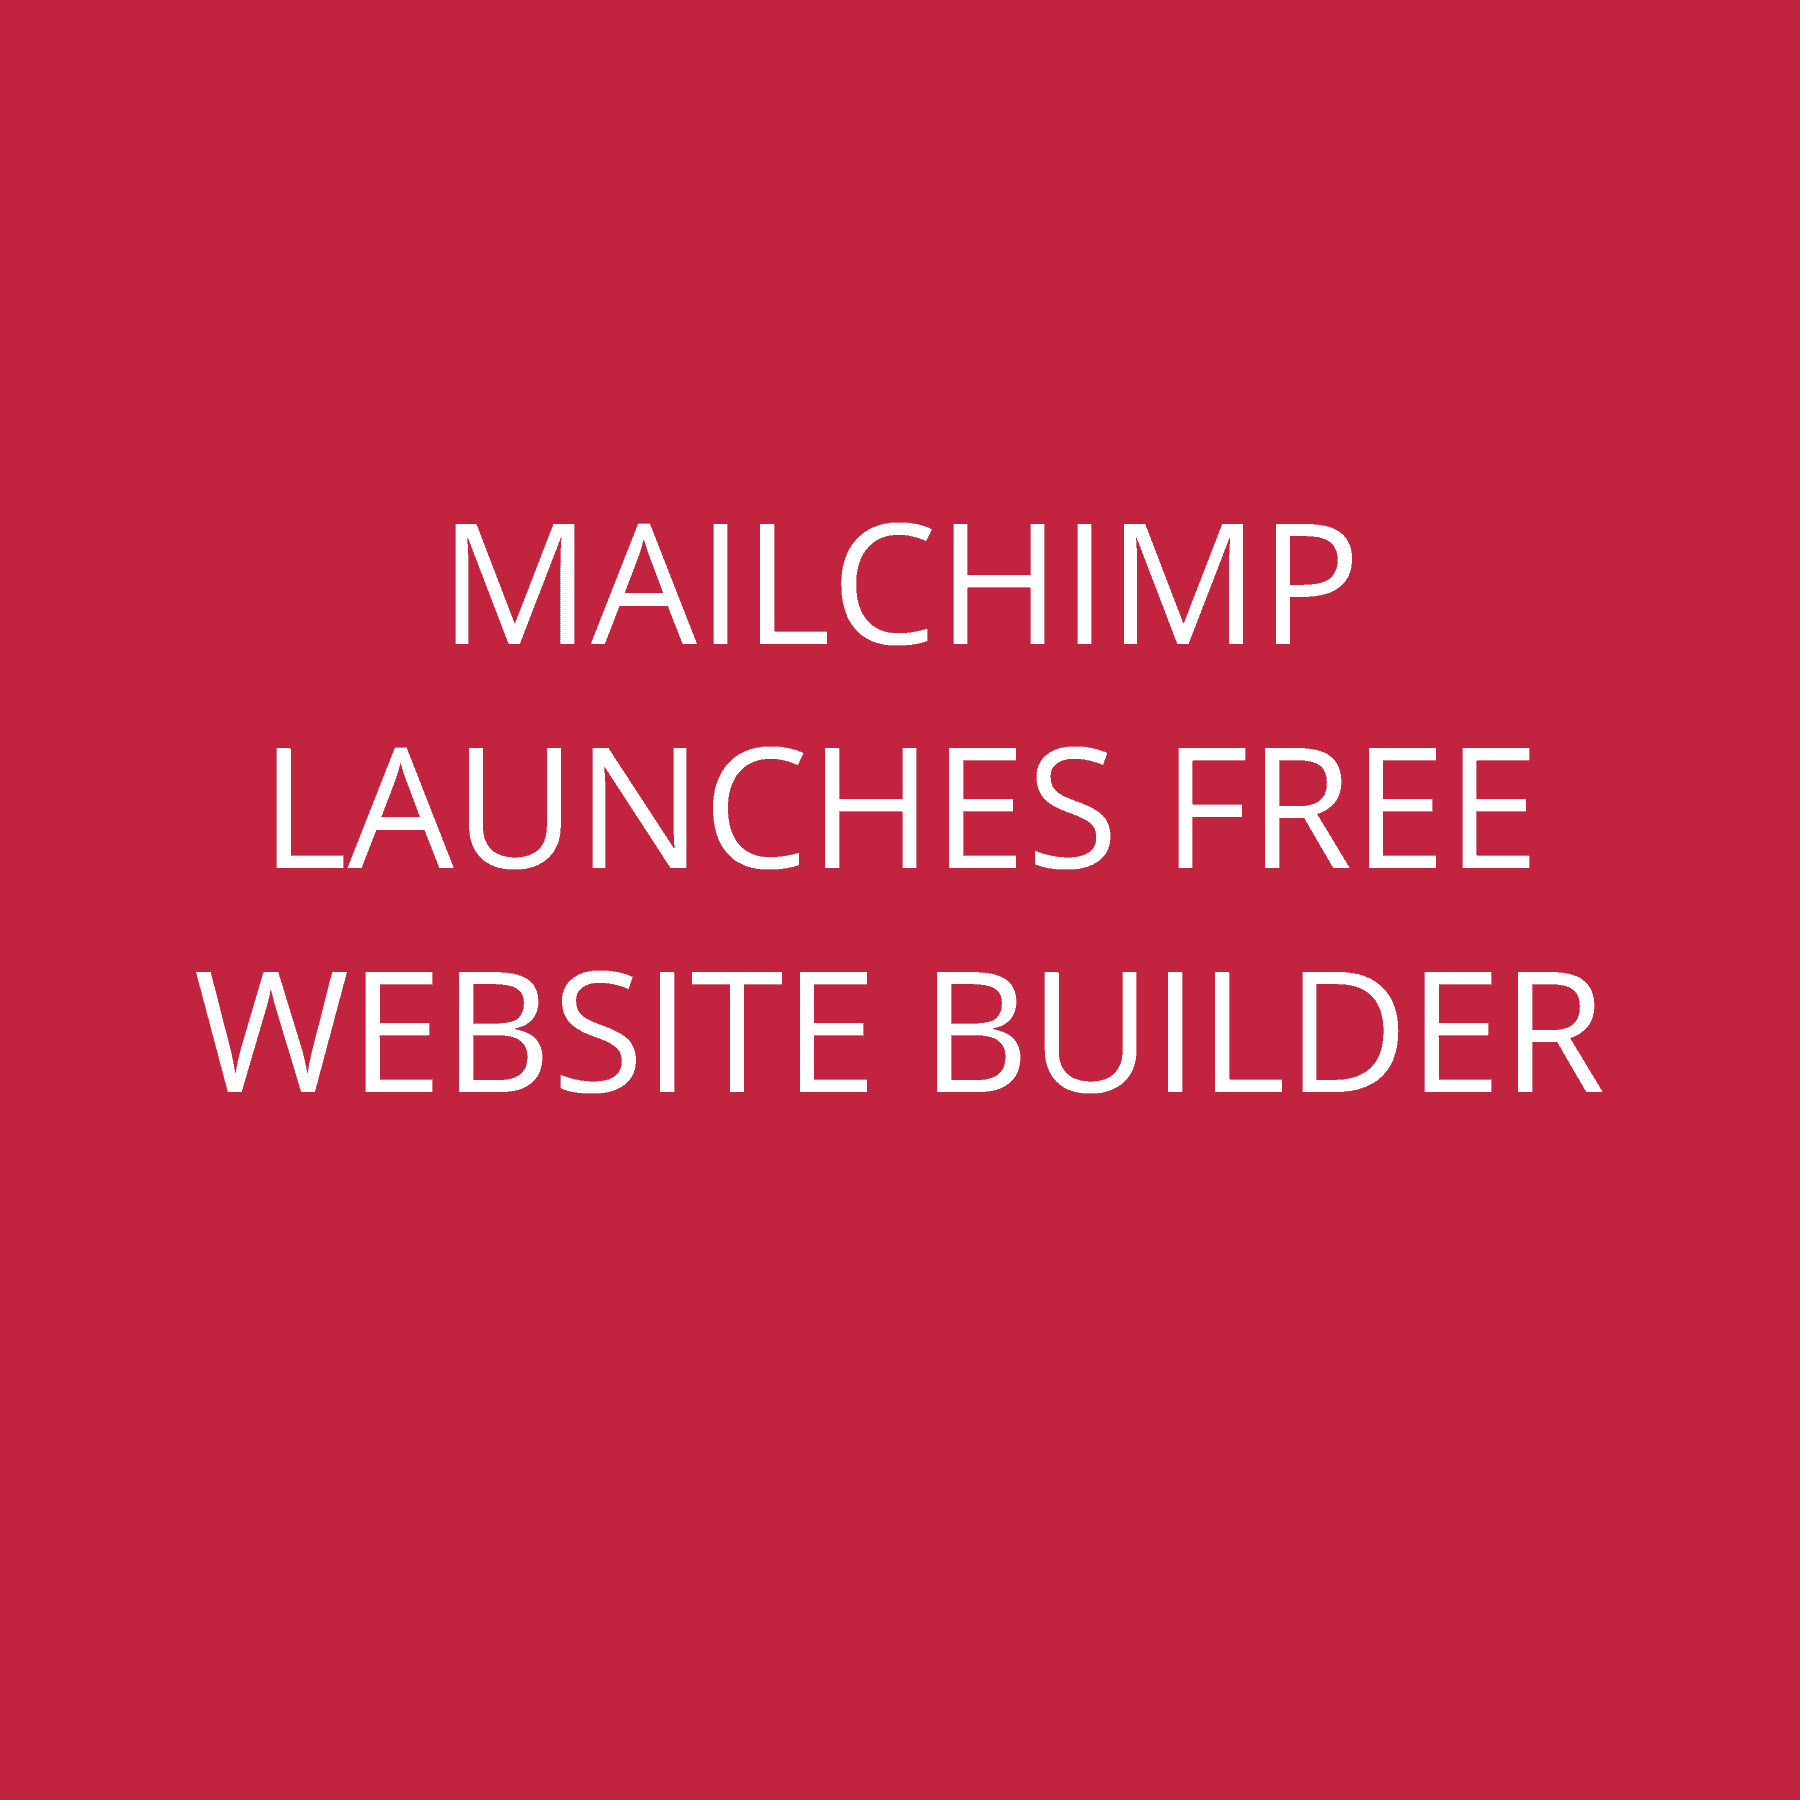 MailChimp launches Free Website Builder